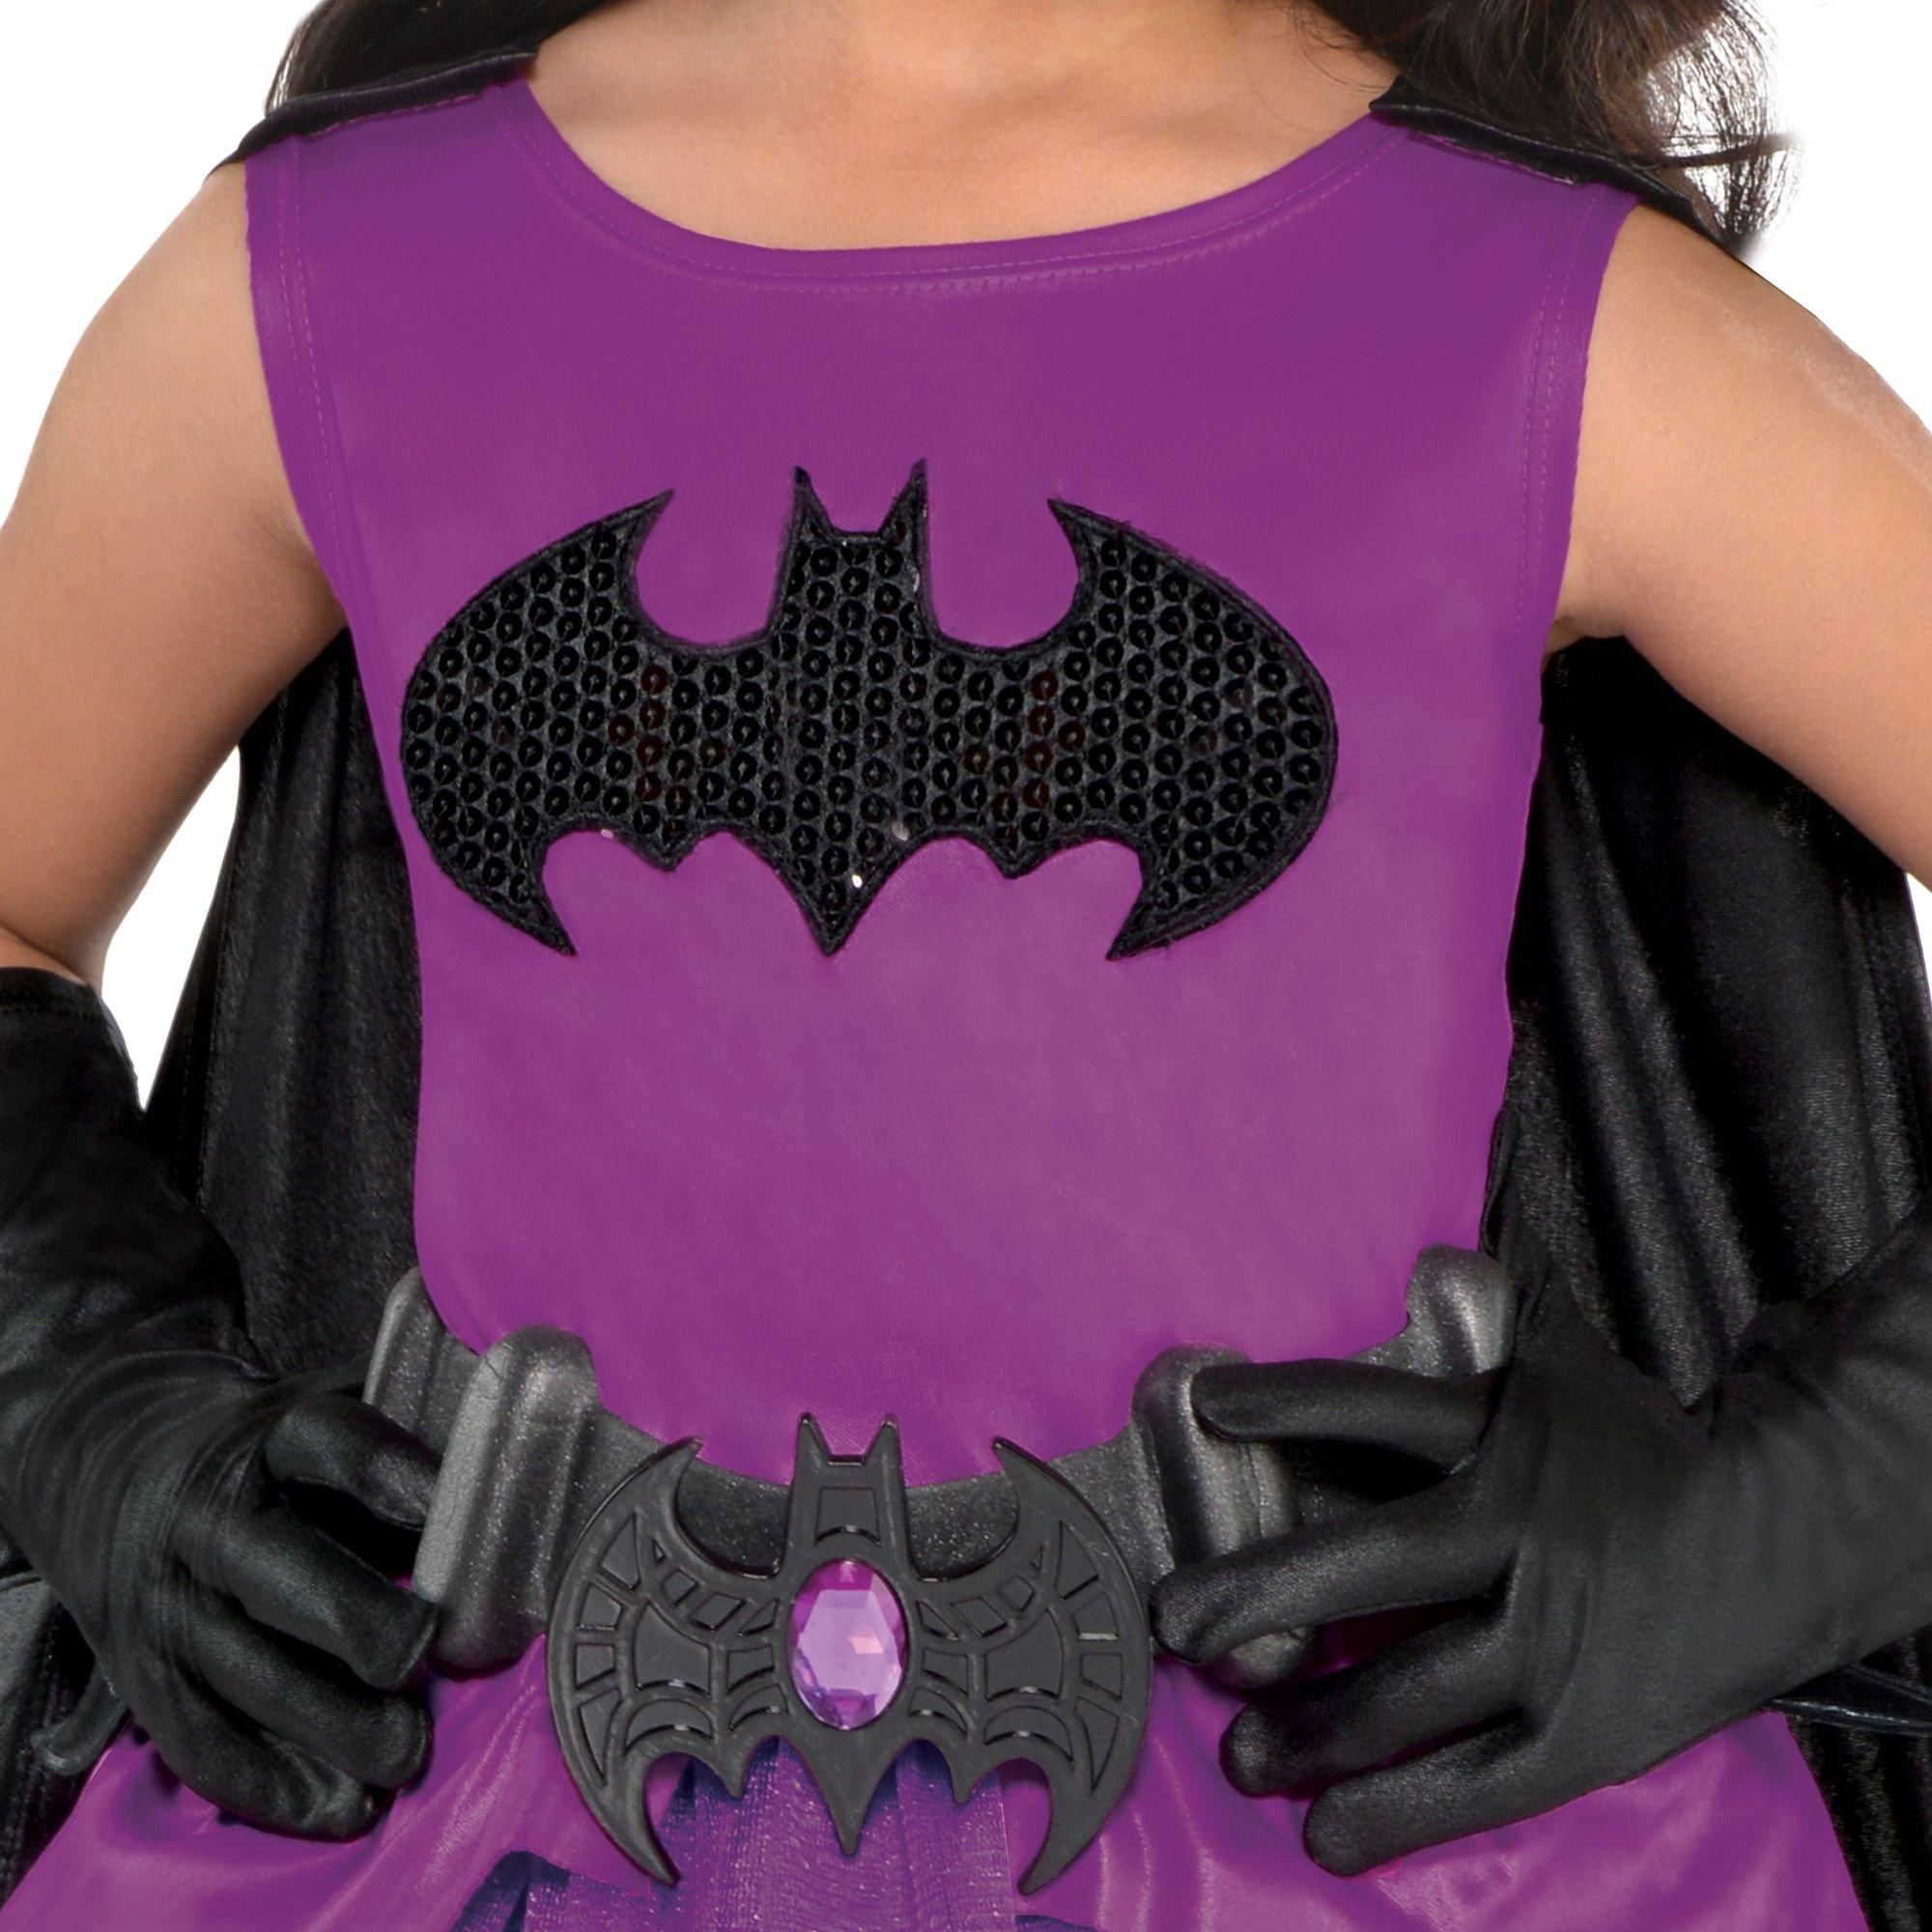 batman and batgirl costumes for kids